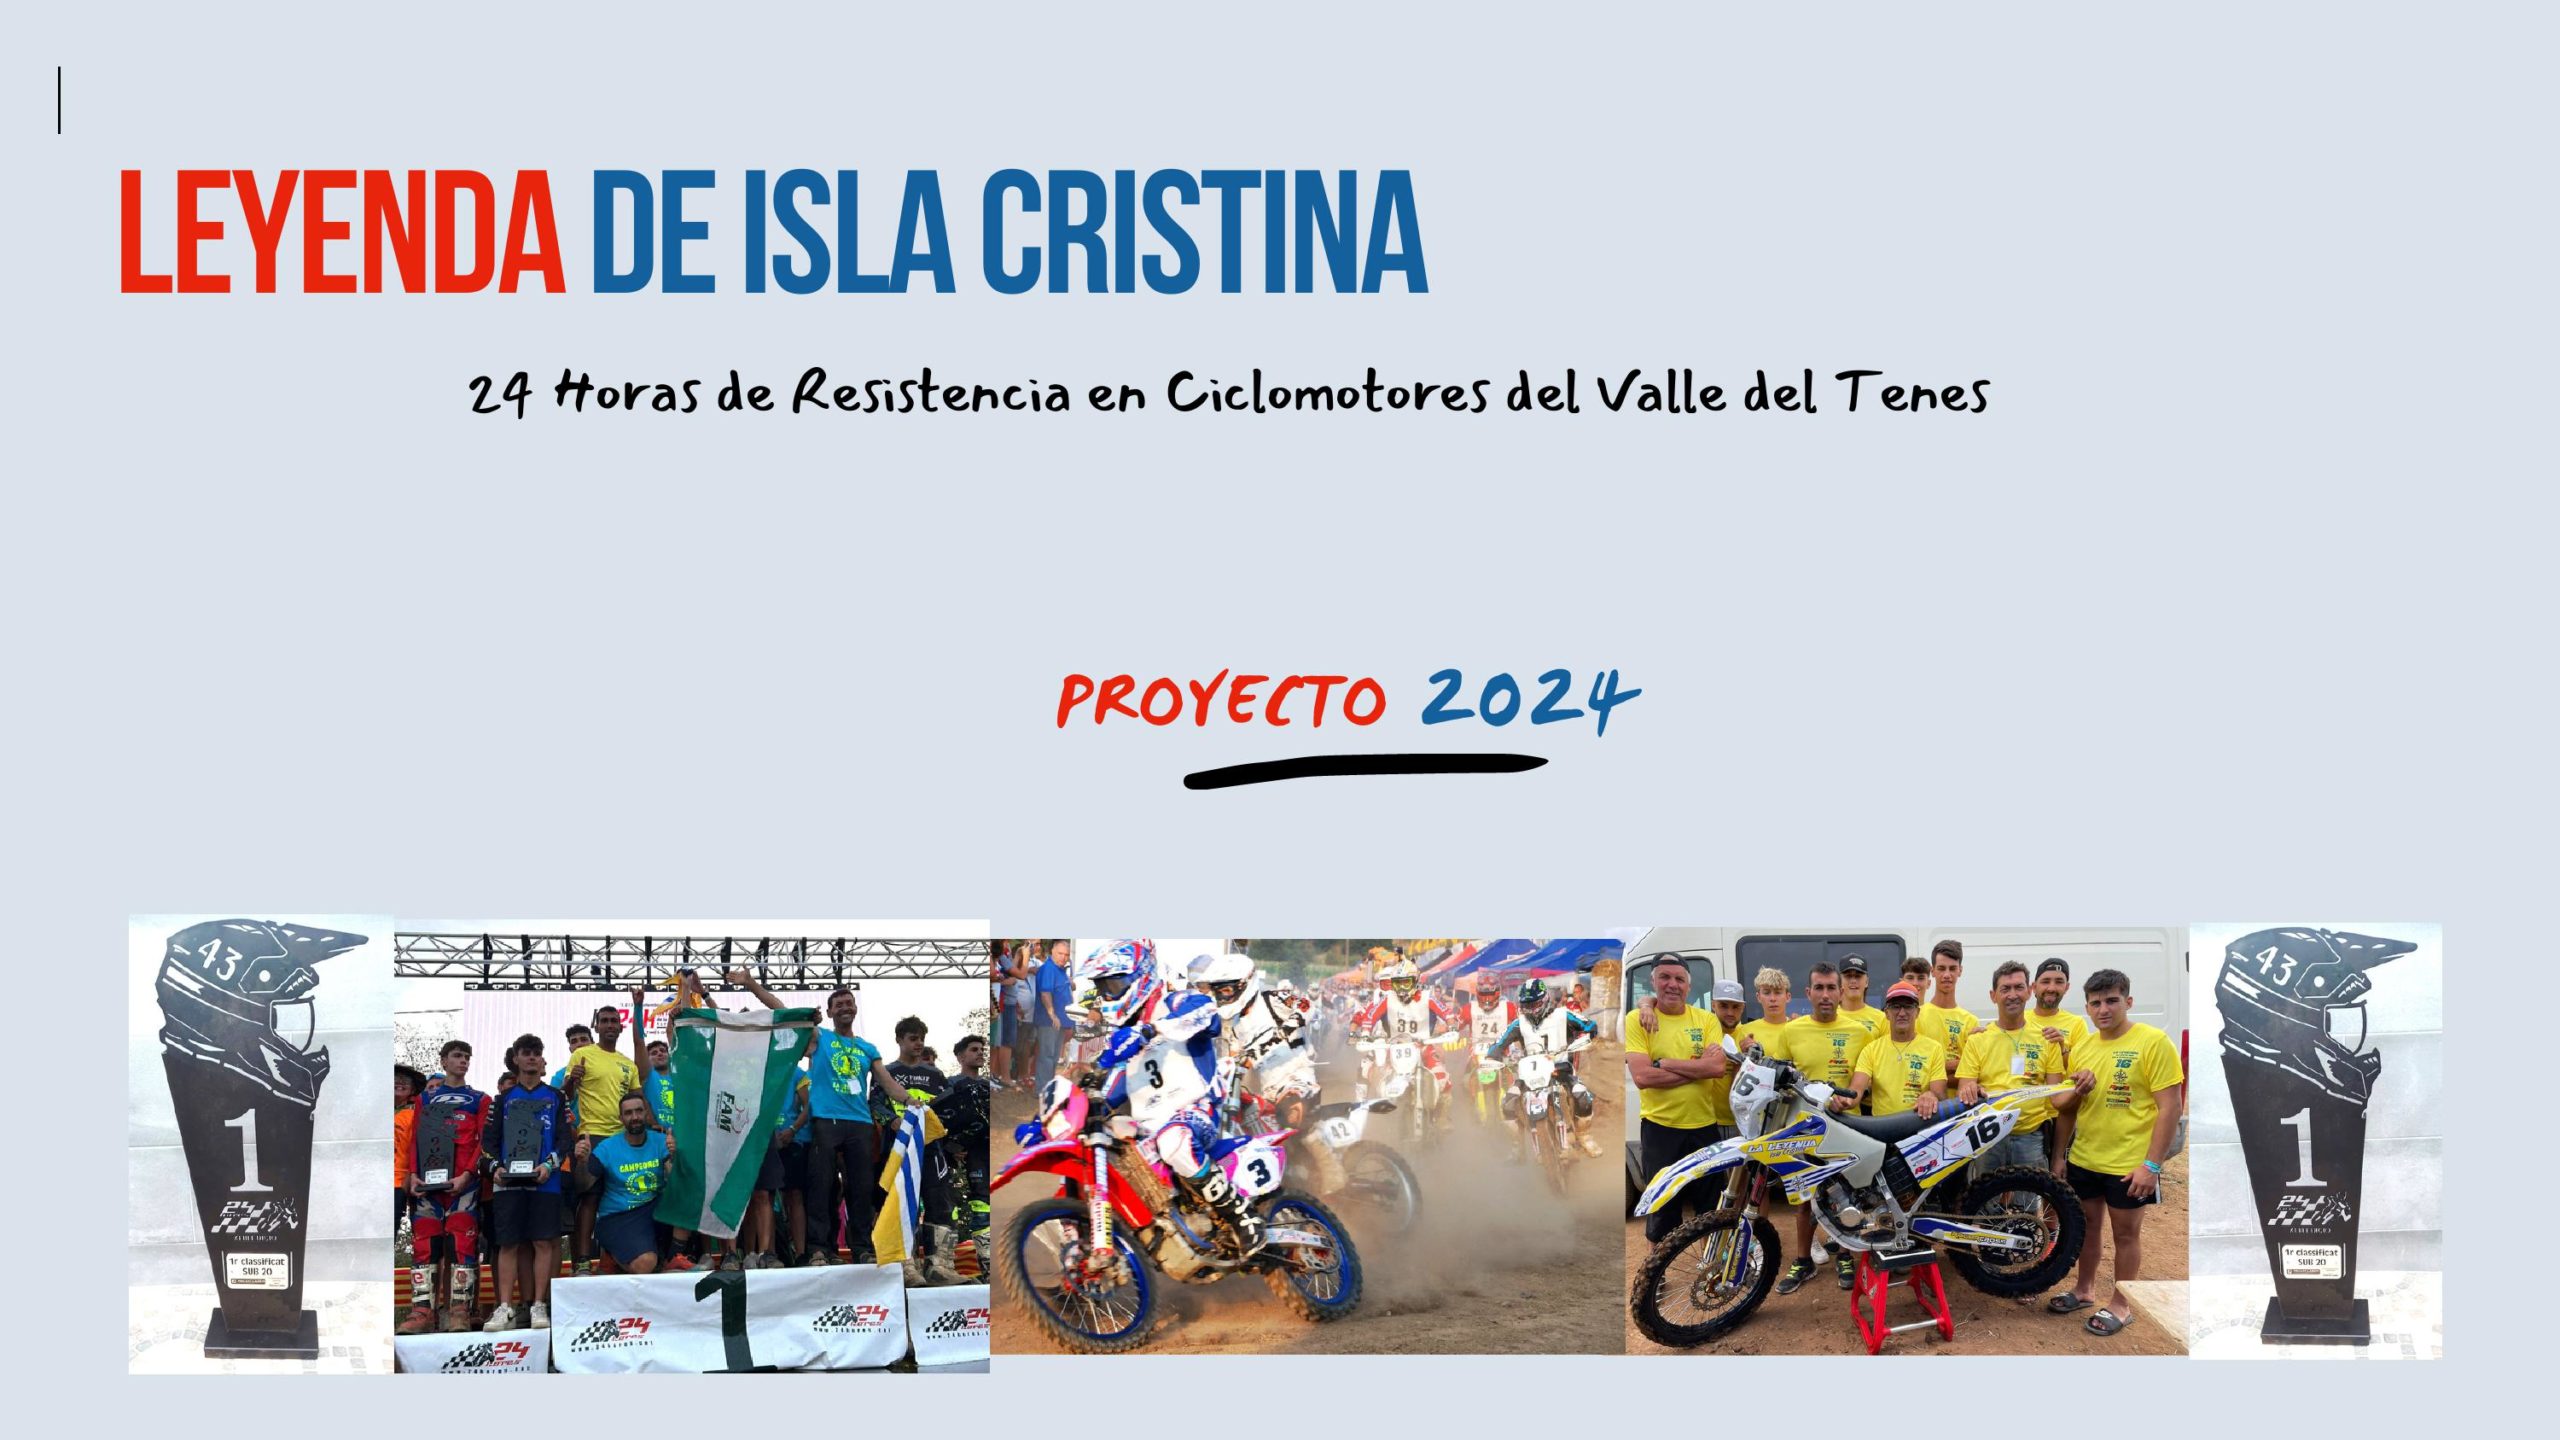 “Proyecto 2024” La Leyenda de Isla Cristina